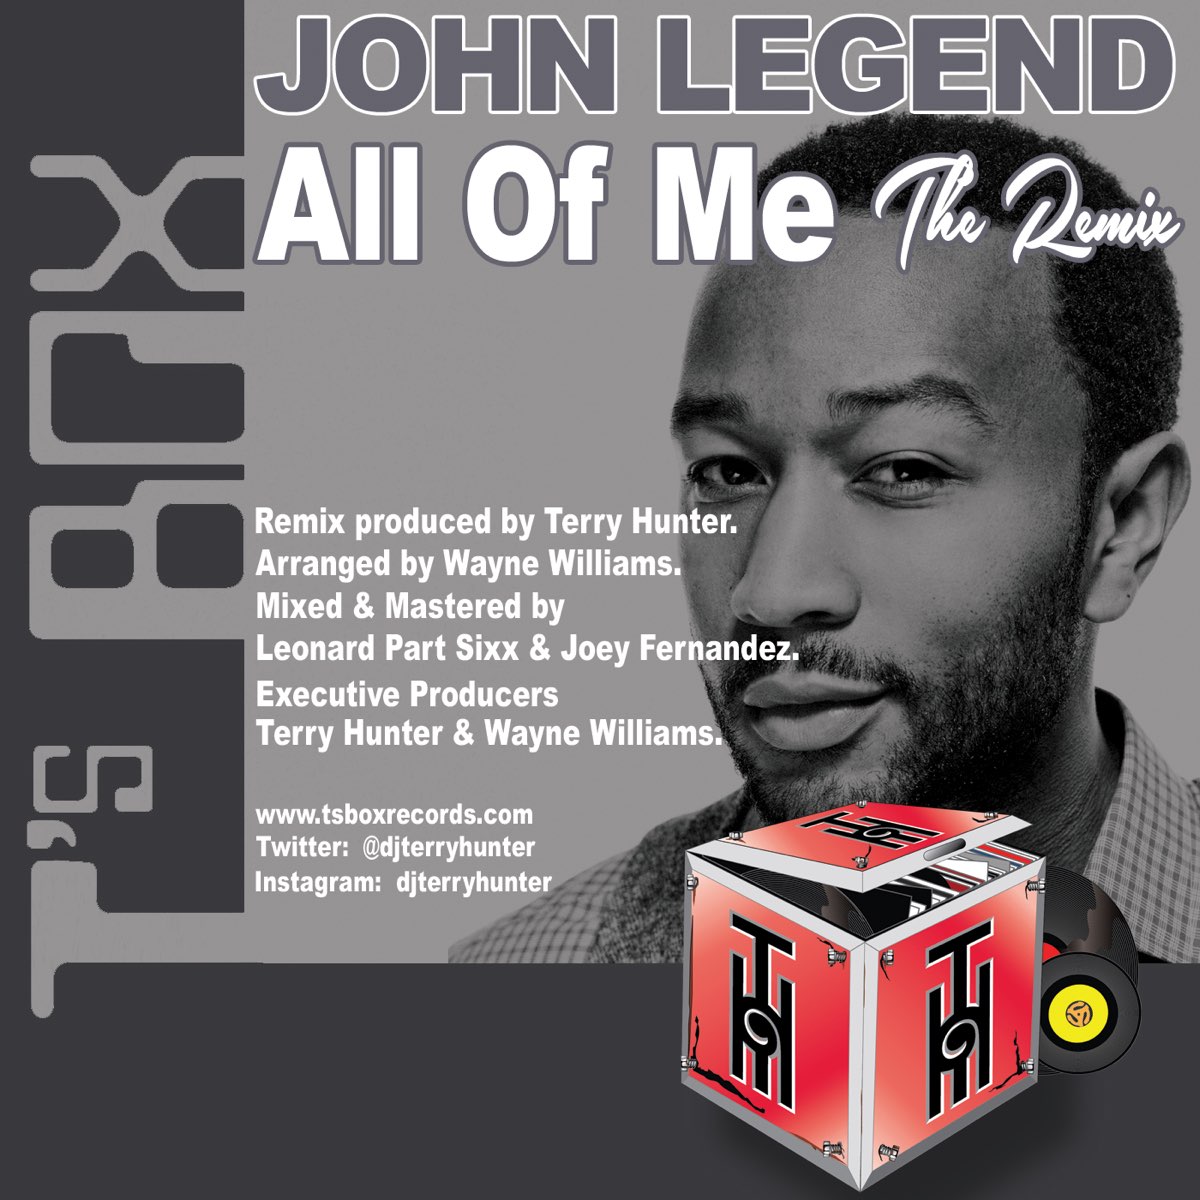 Джон Ледженд all of me. John Legend песни. John Legend all of me быстрая песня. John Legend - Tonight (+ m&n) (Remix) !. All of me джон ледженд